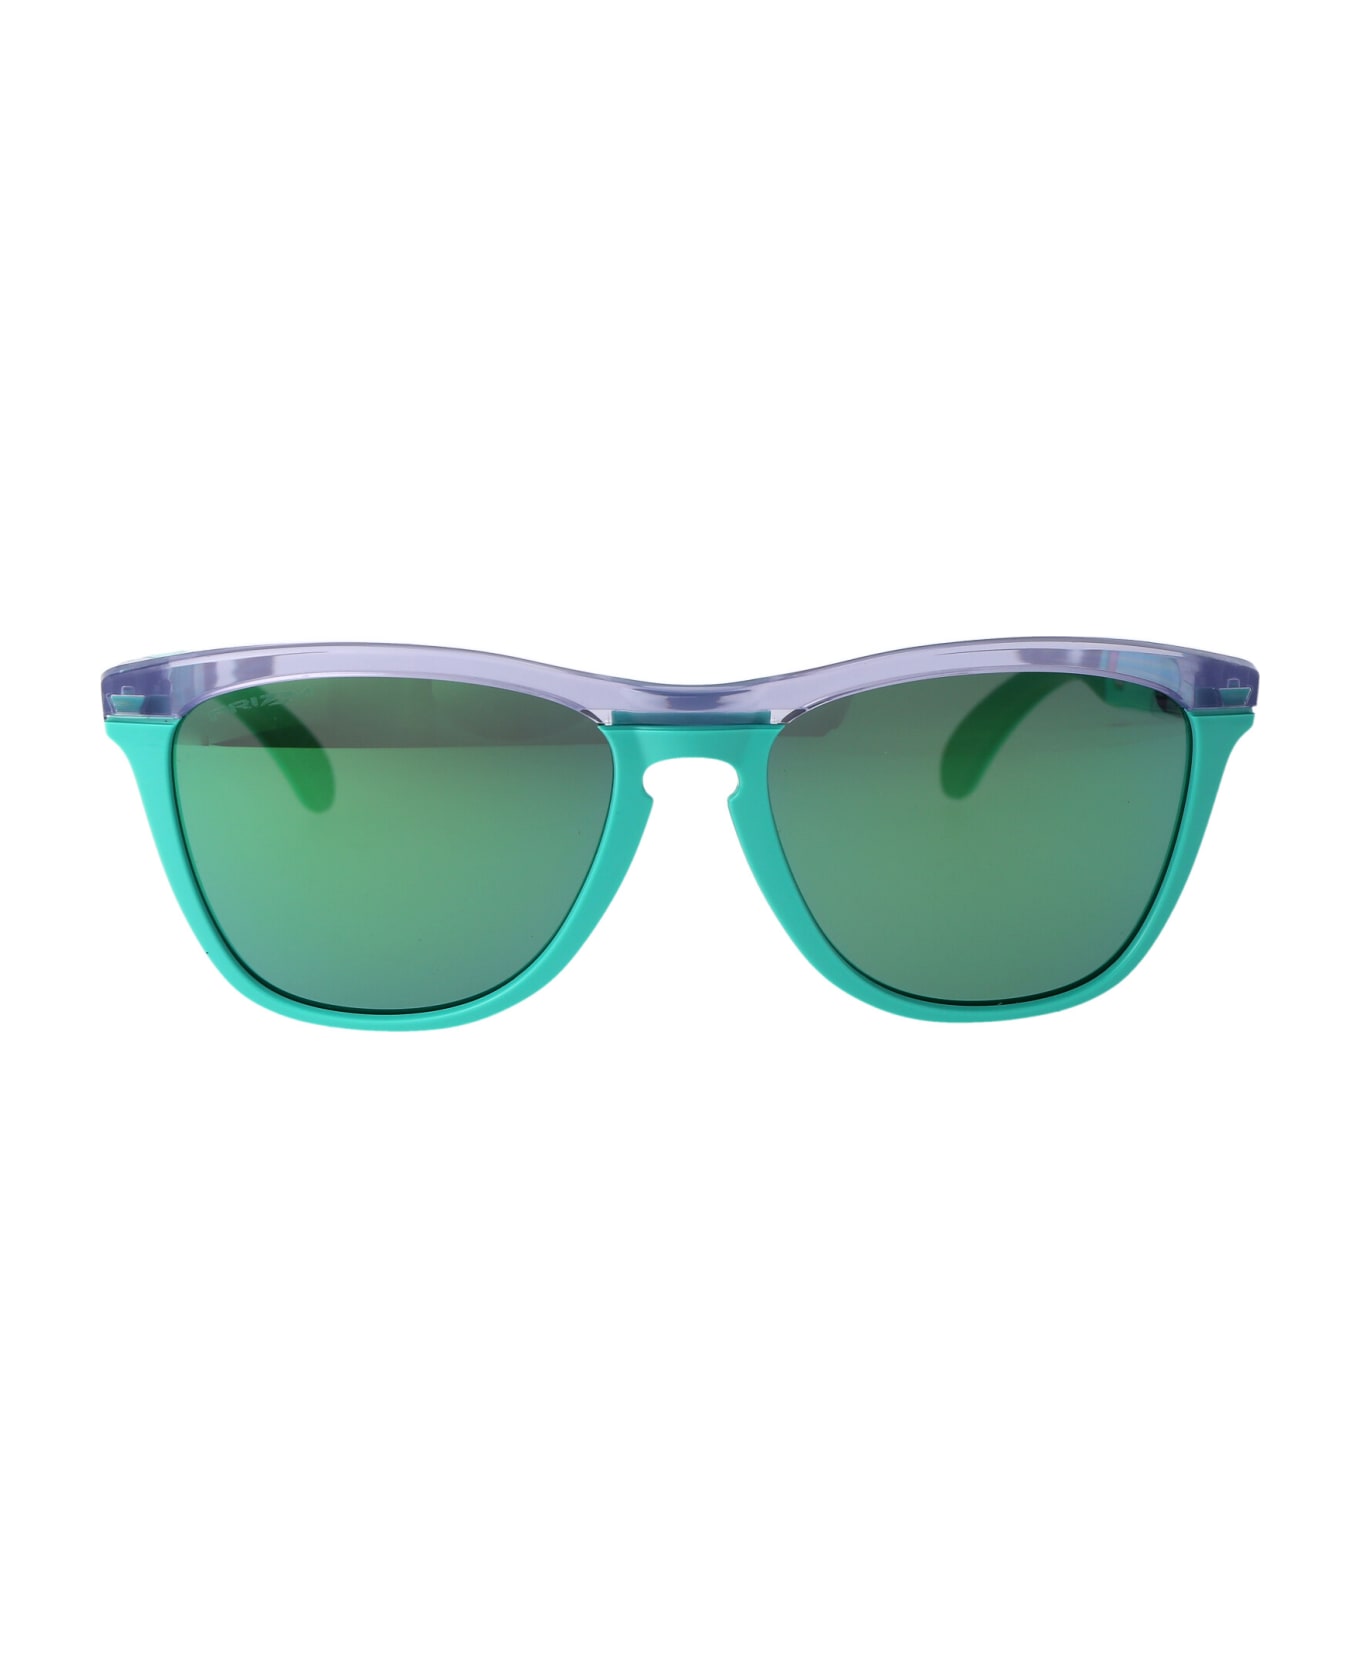 Oakley Frogskins Range Sunglasses - 928406 Lilac/Celeste